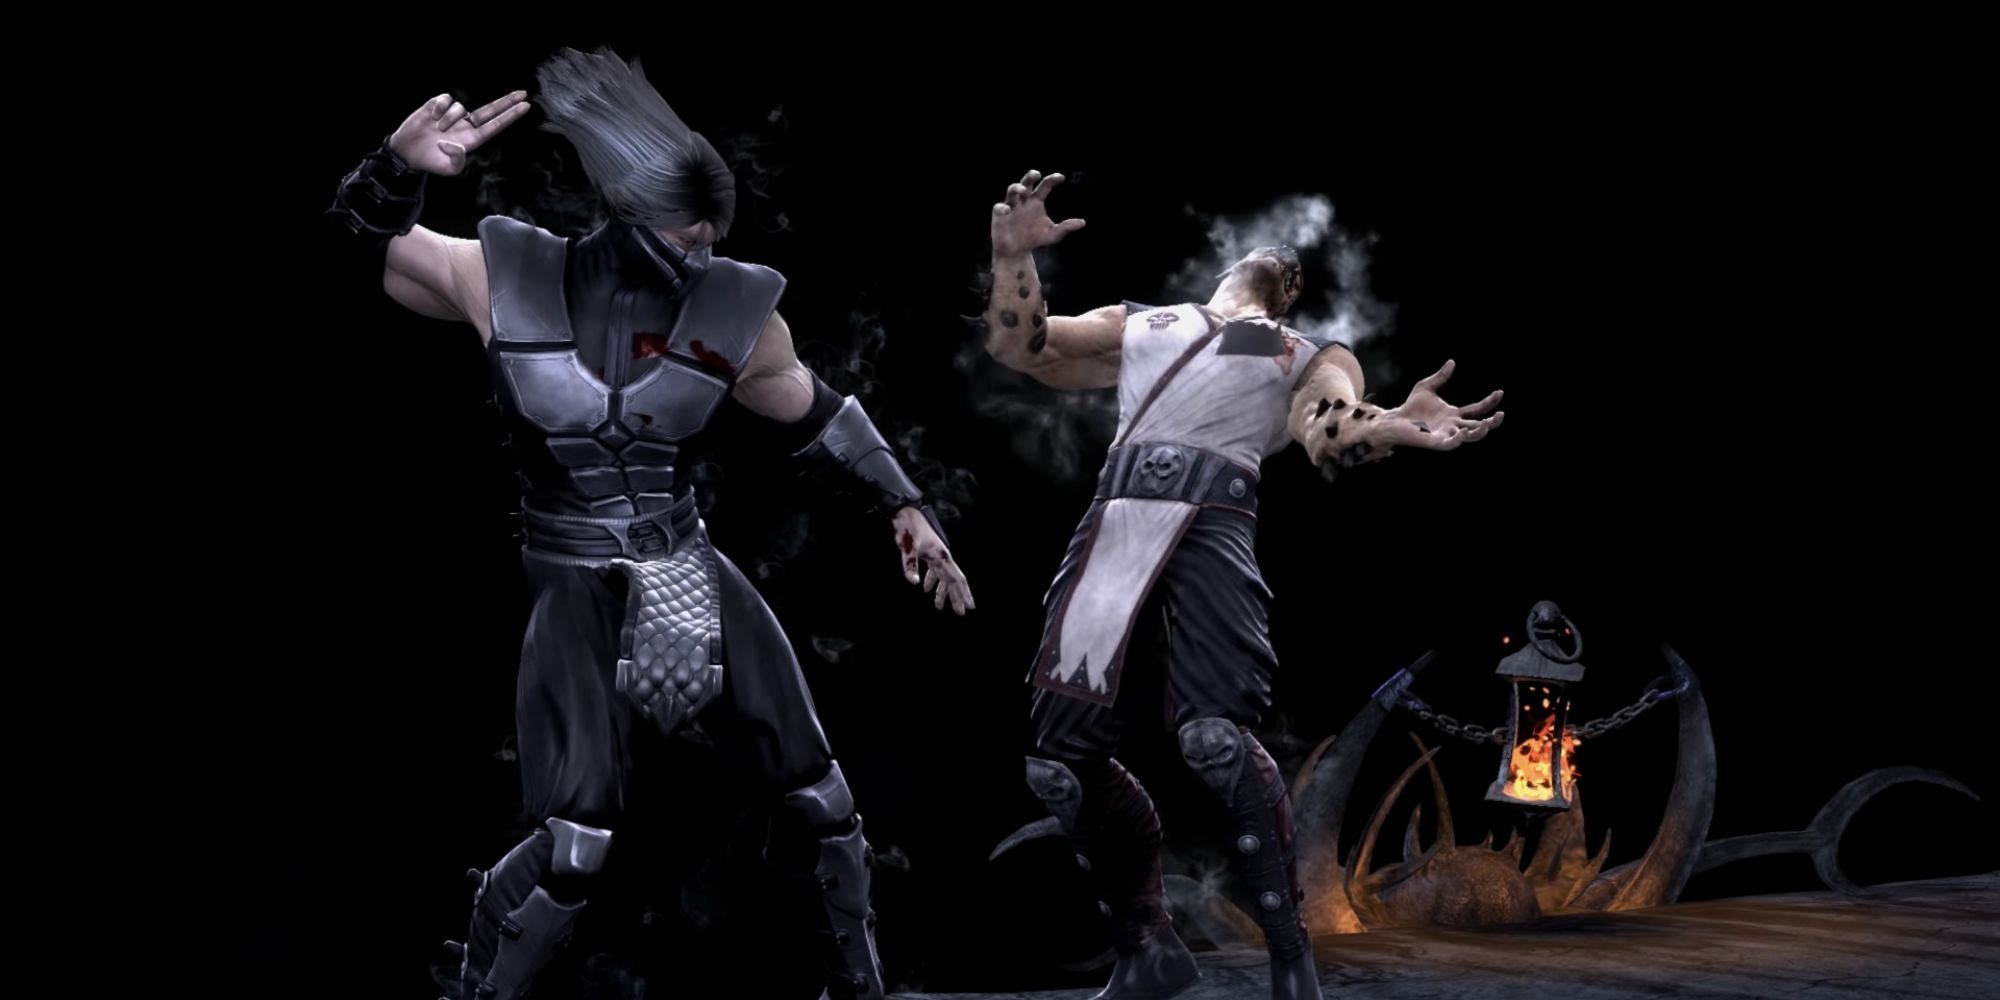 Smoke's old long-hair look in Mortal Kombat 9.